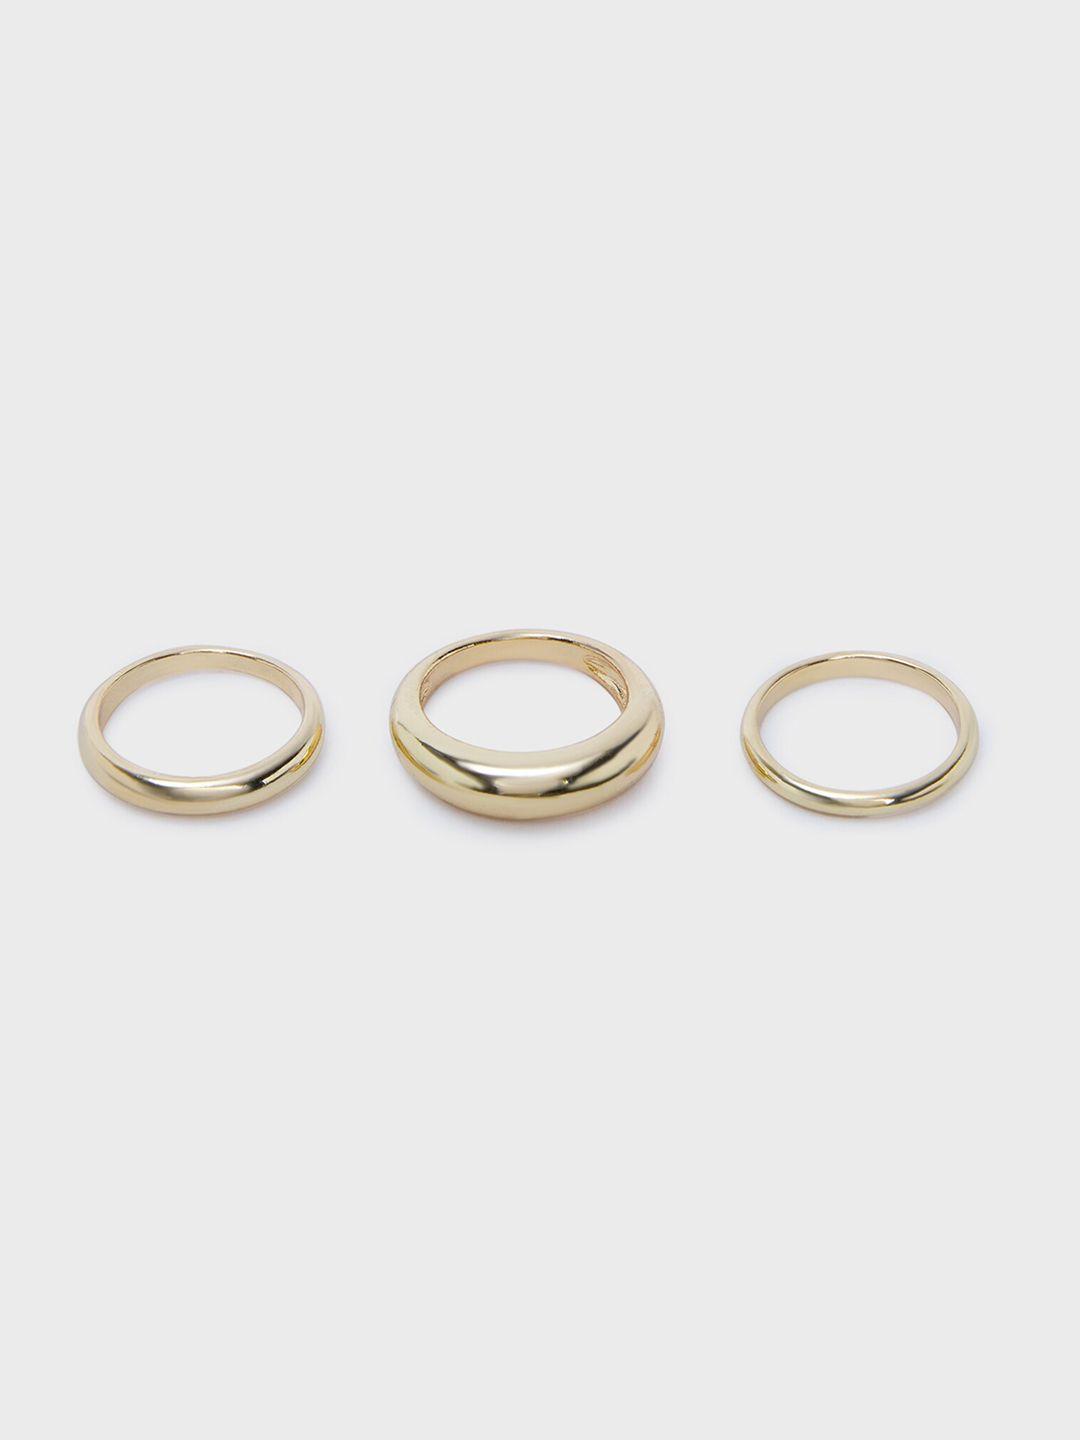 20dresses set of 6 gold-toned  finger ring